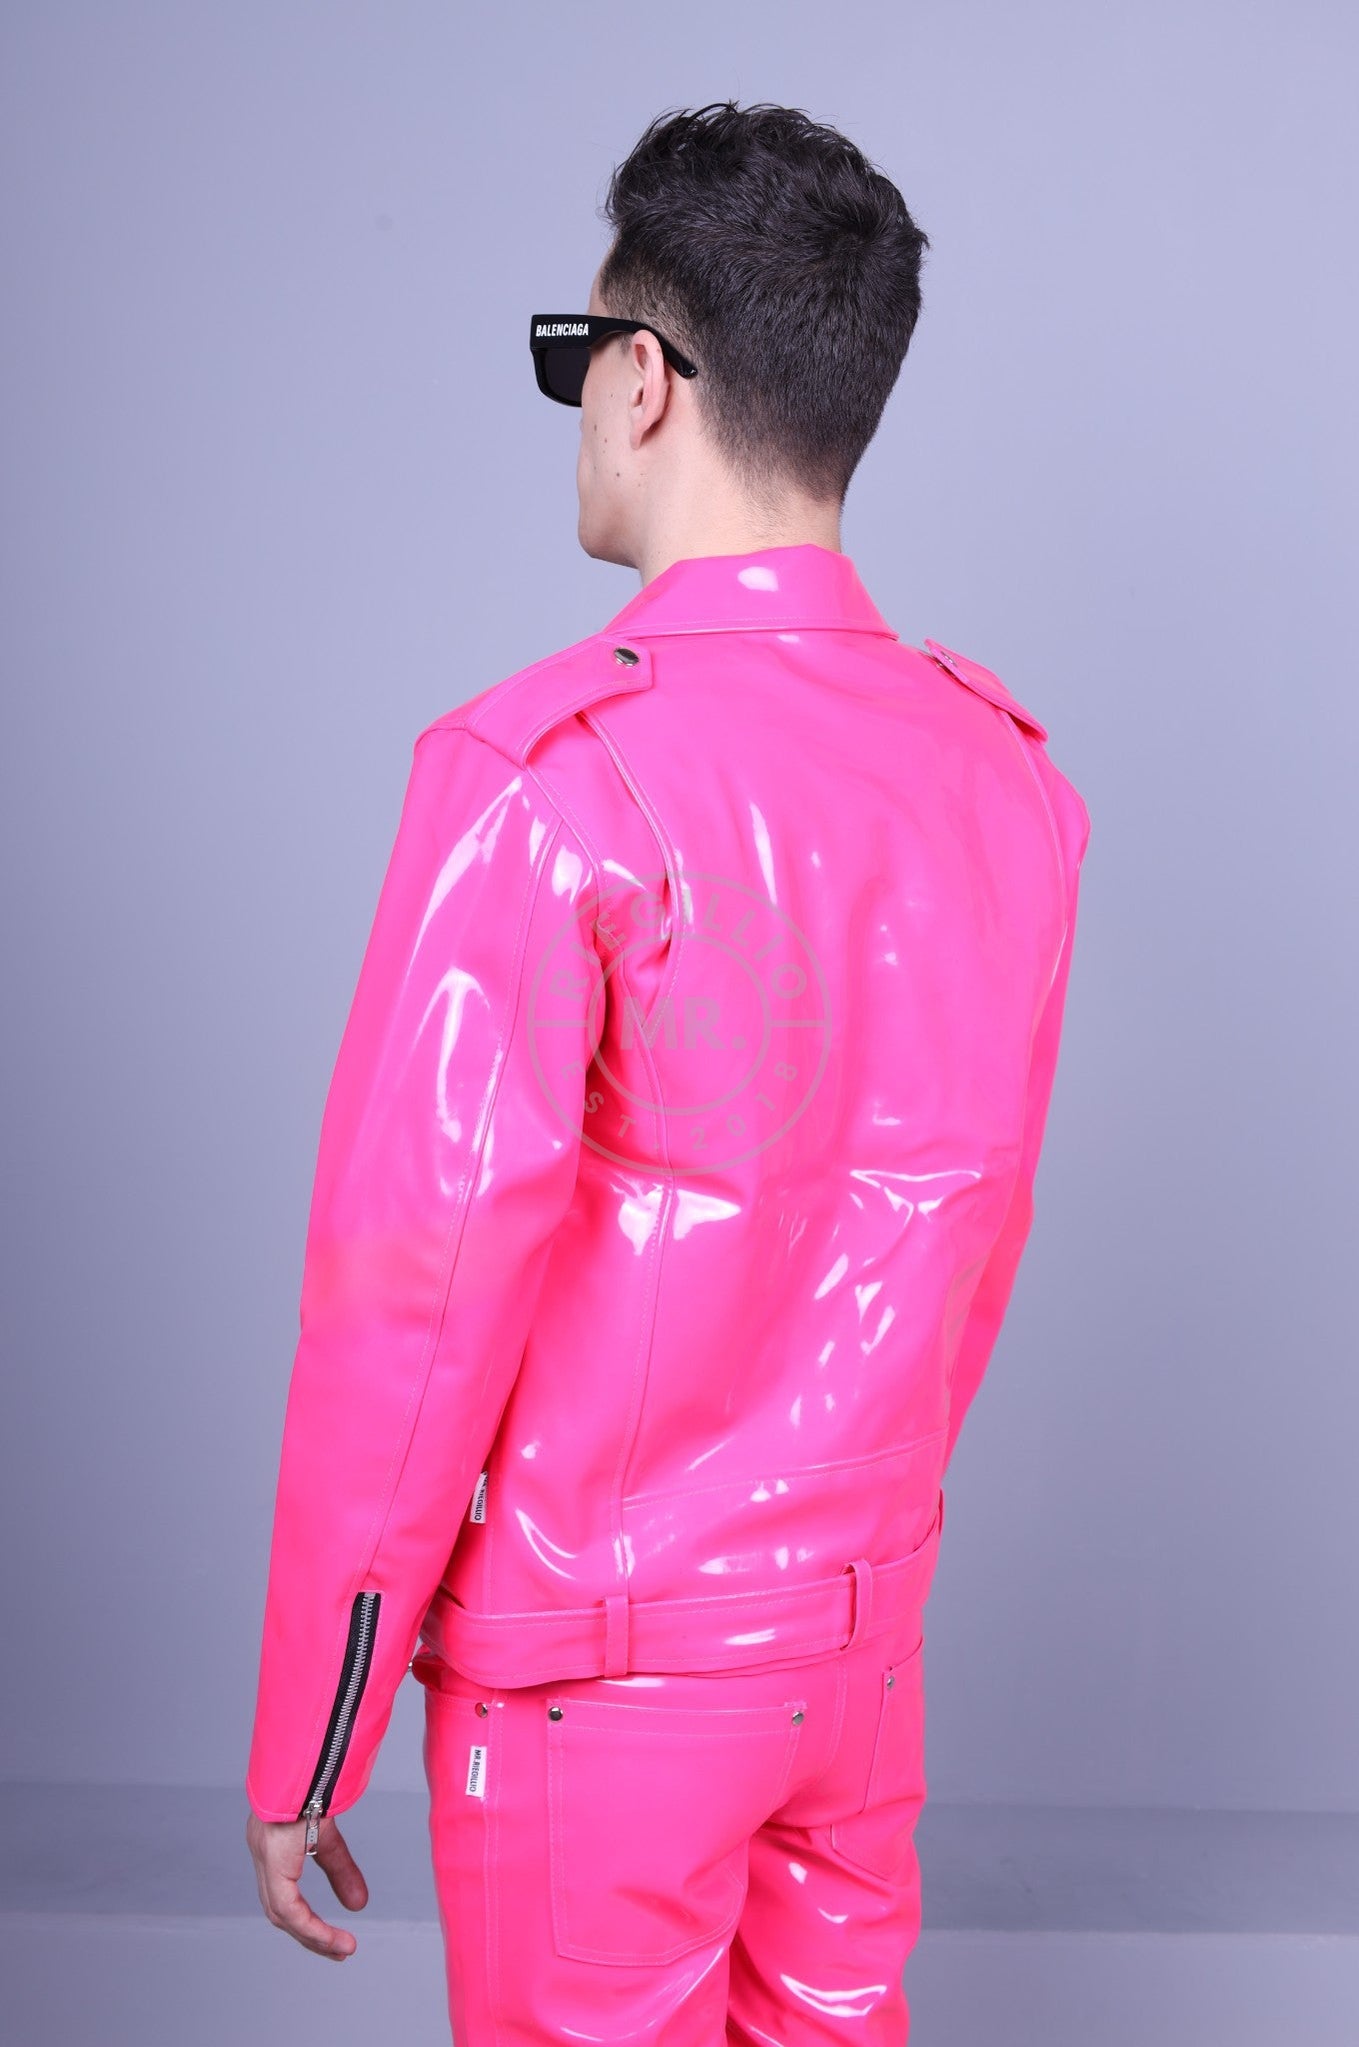 Pink PVC Brando Jacket at MR. Riegillio